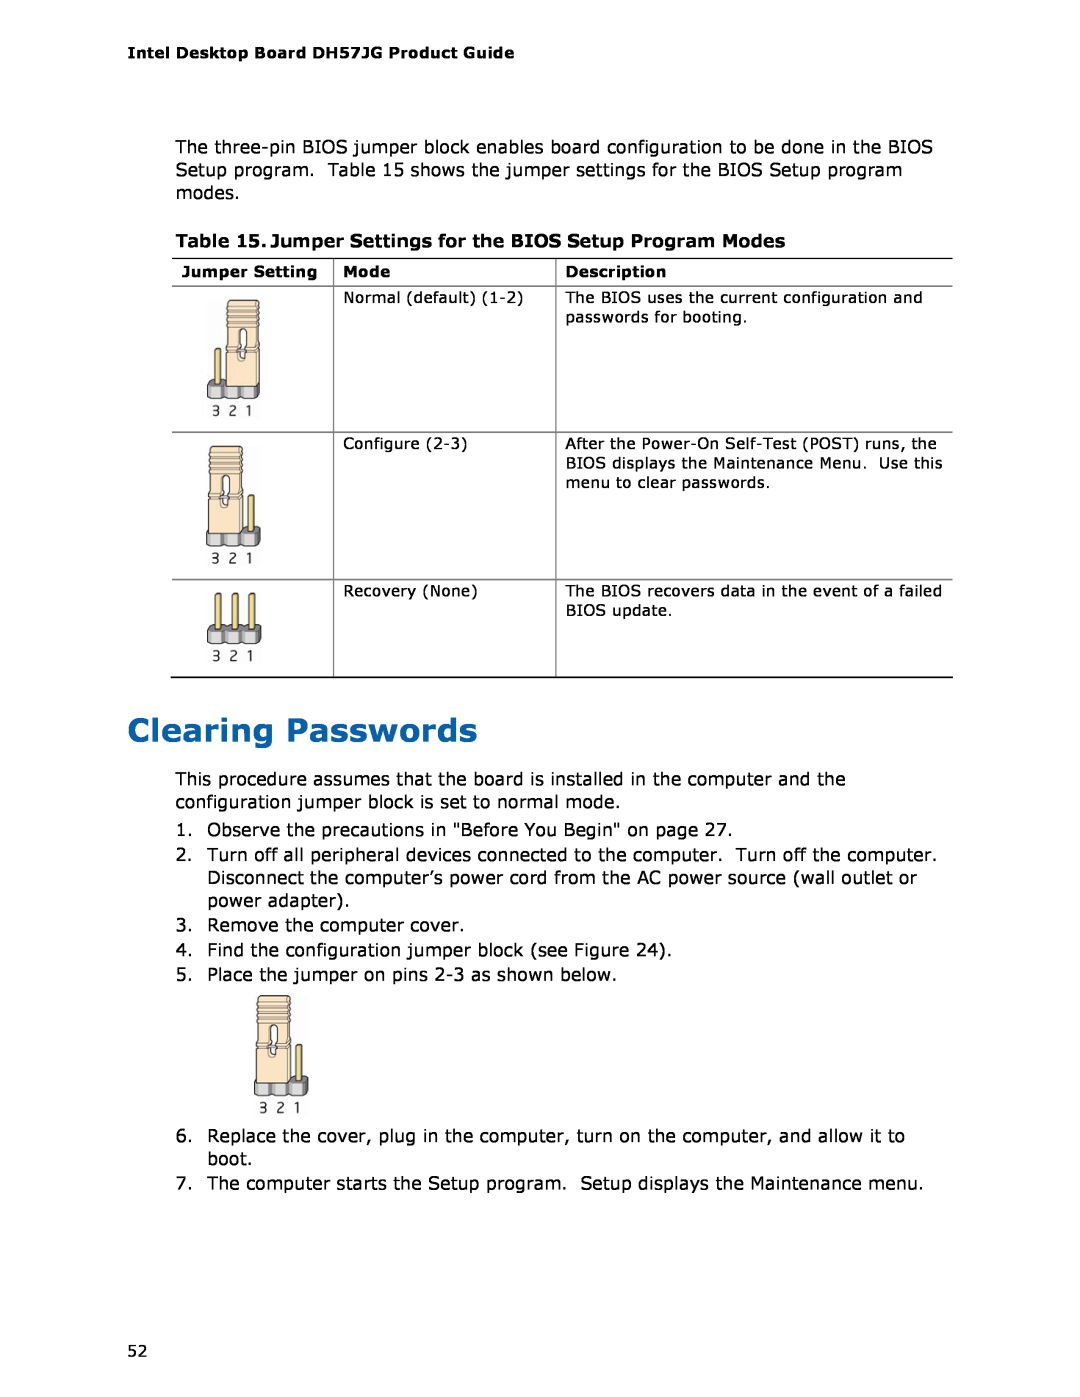 Intel BLKDH57JG manual Clearing Passwords, Jumper Settings for the BIOS Setup Program Modes 